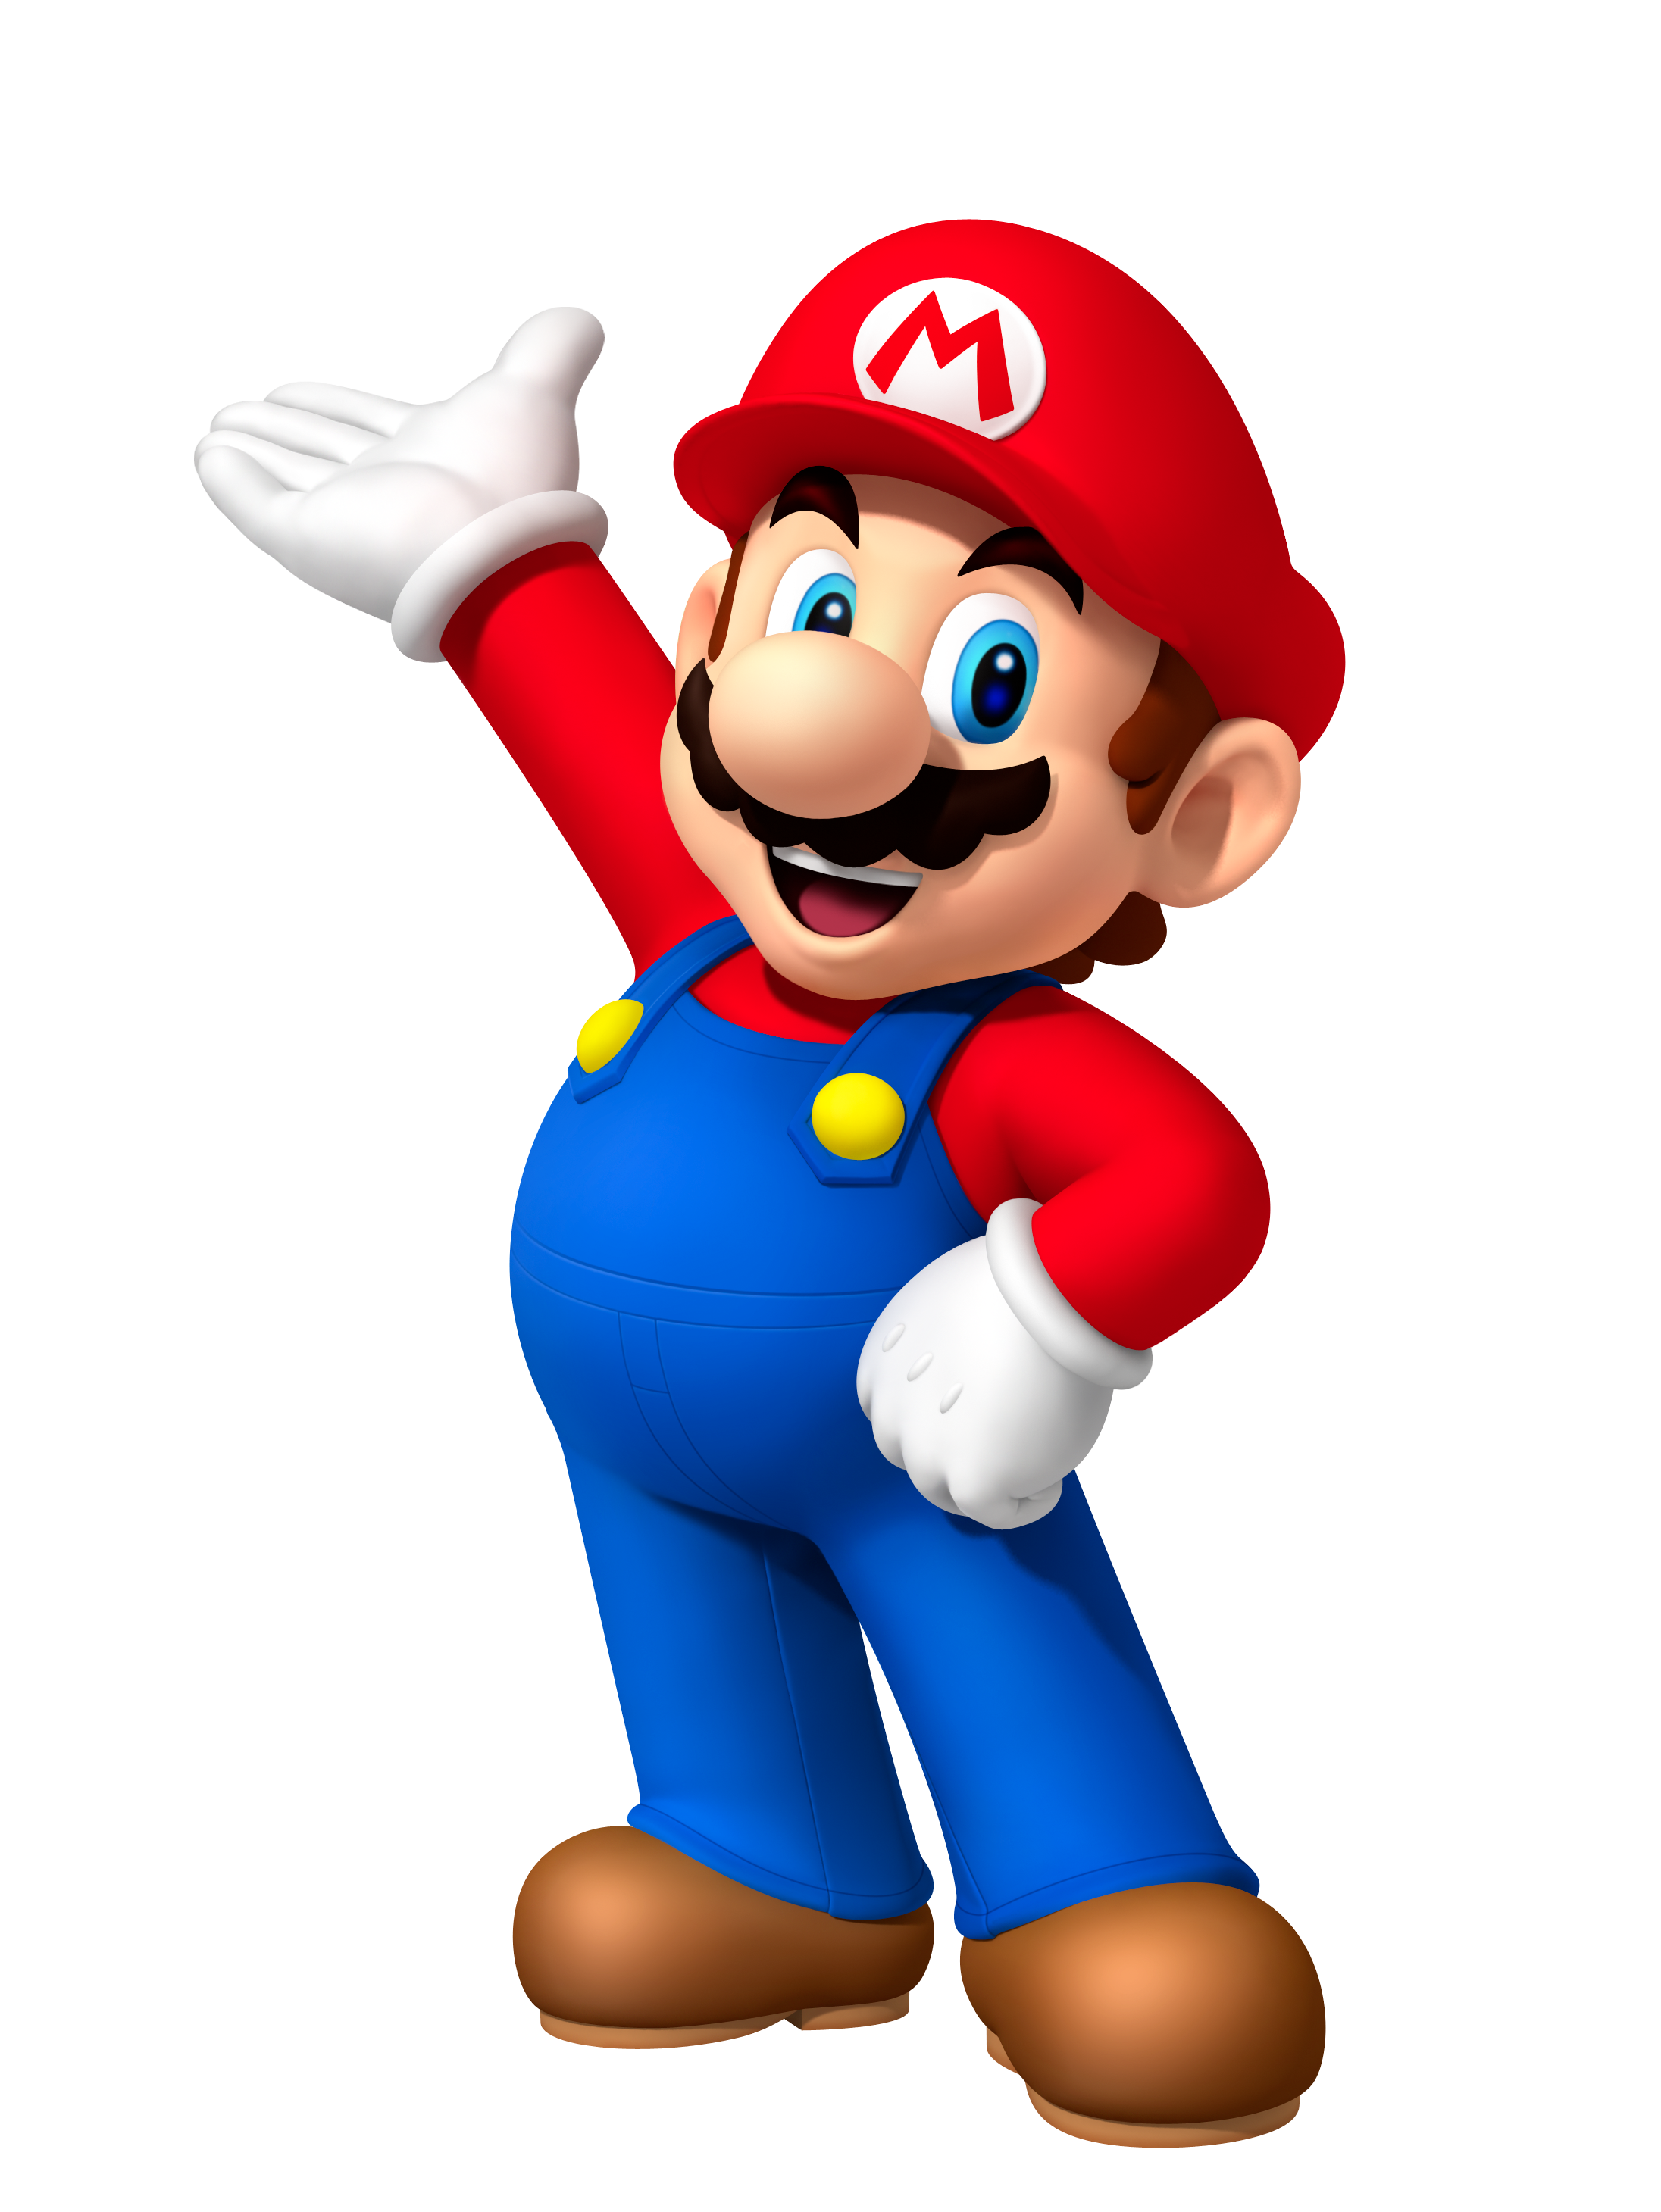 Super Mario PNG Image - PurePNG | Free transparent CC0 PNG ...